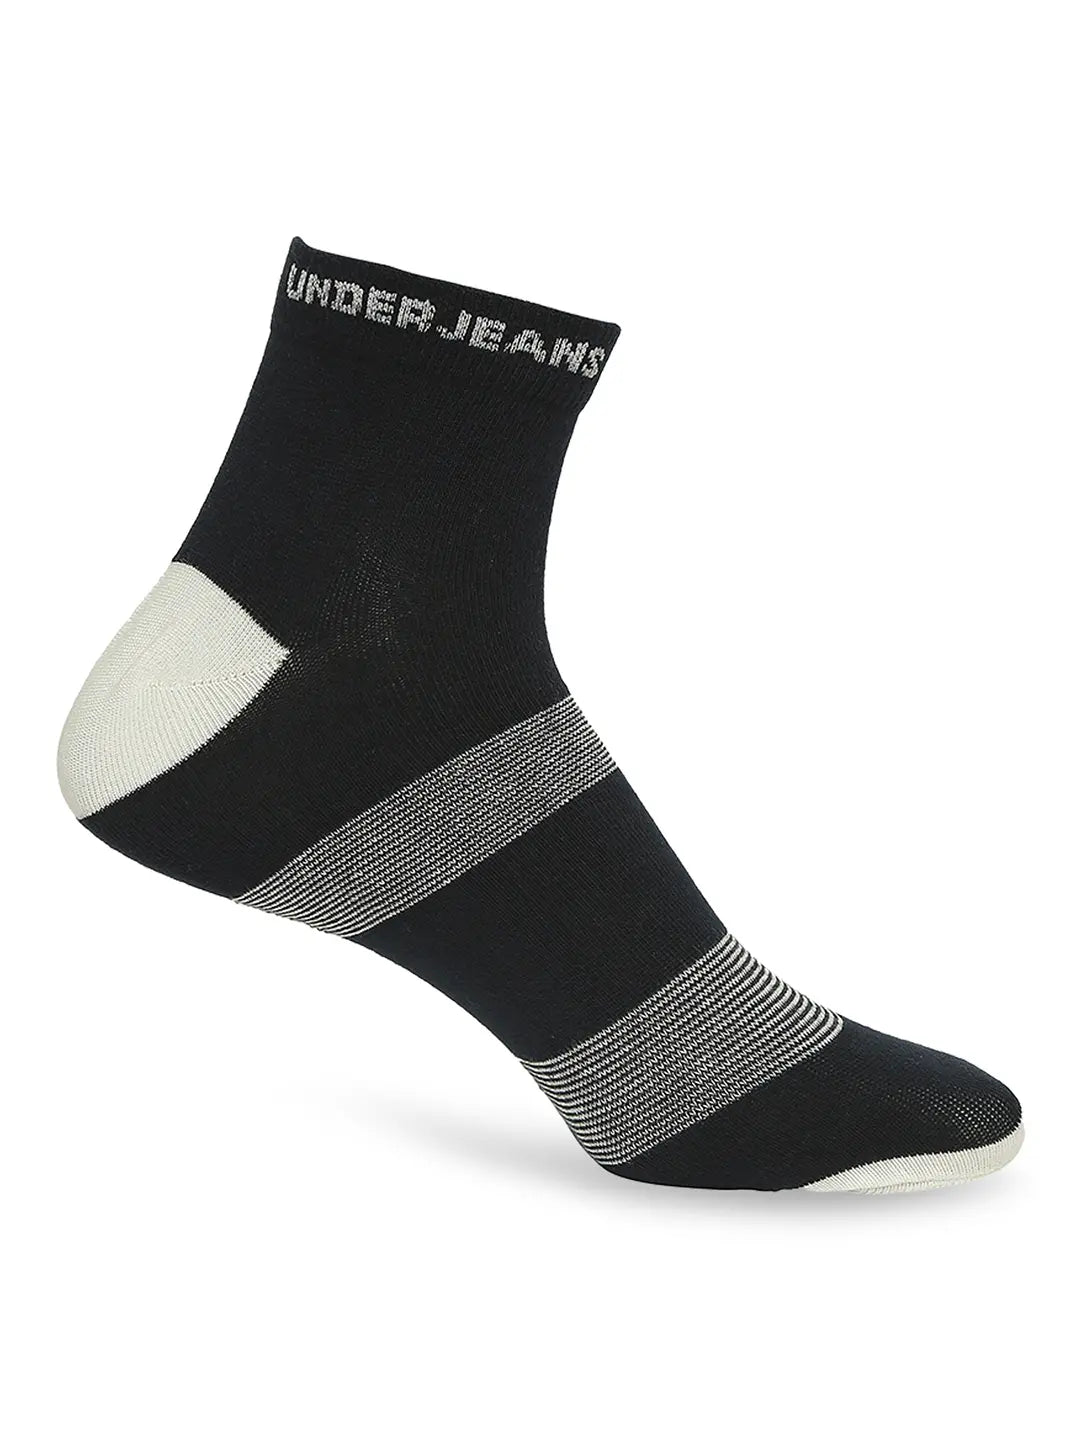 Men Premium Dark Grey & Navy Ankle Length Socks - Pack Of 2- Underjeans by Spykar